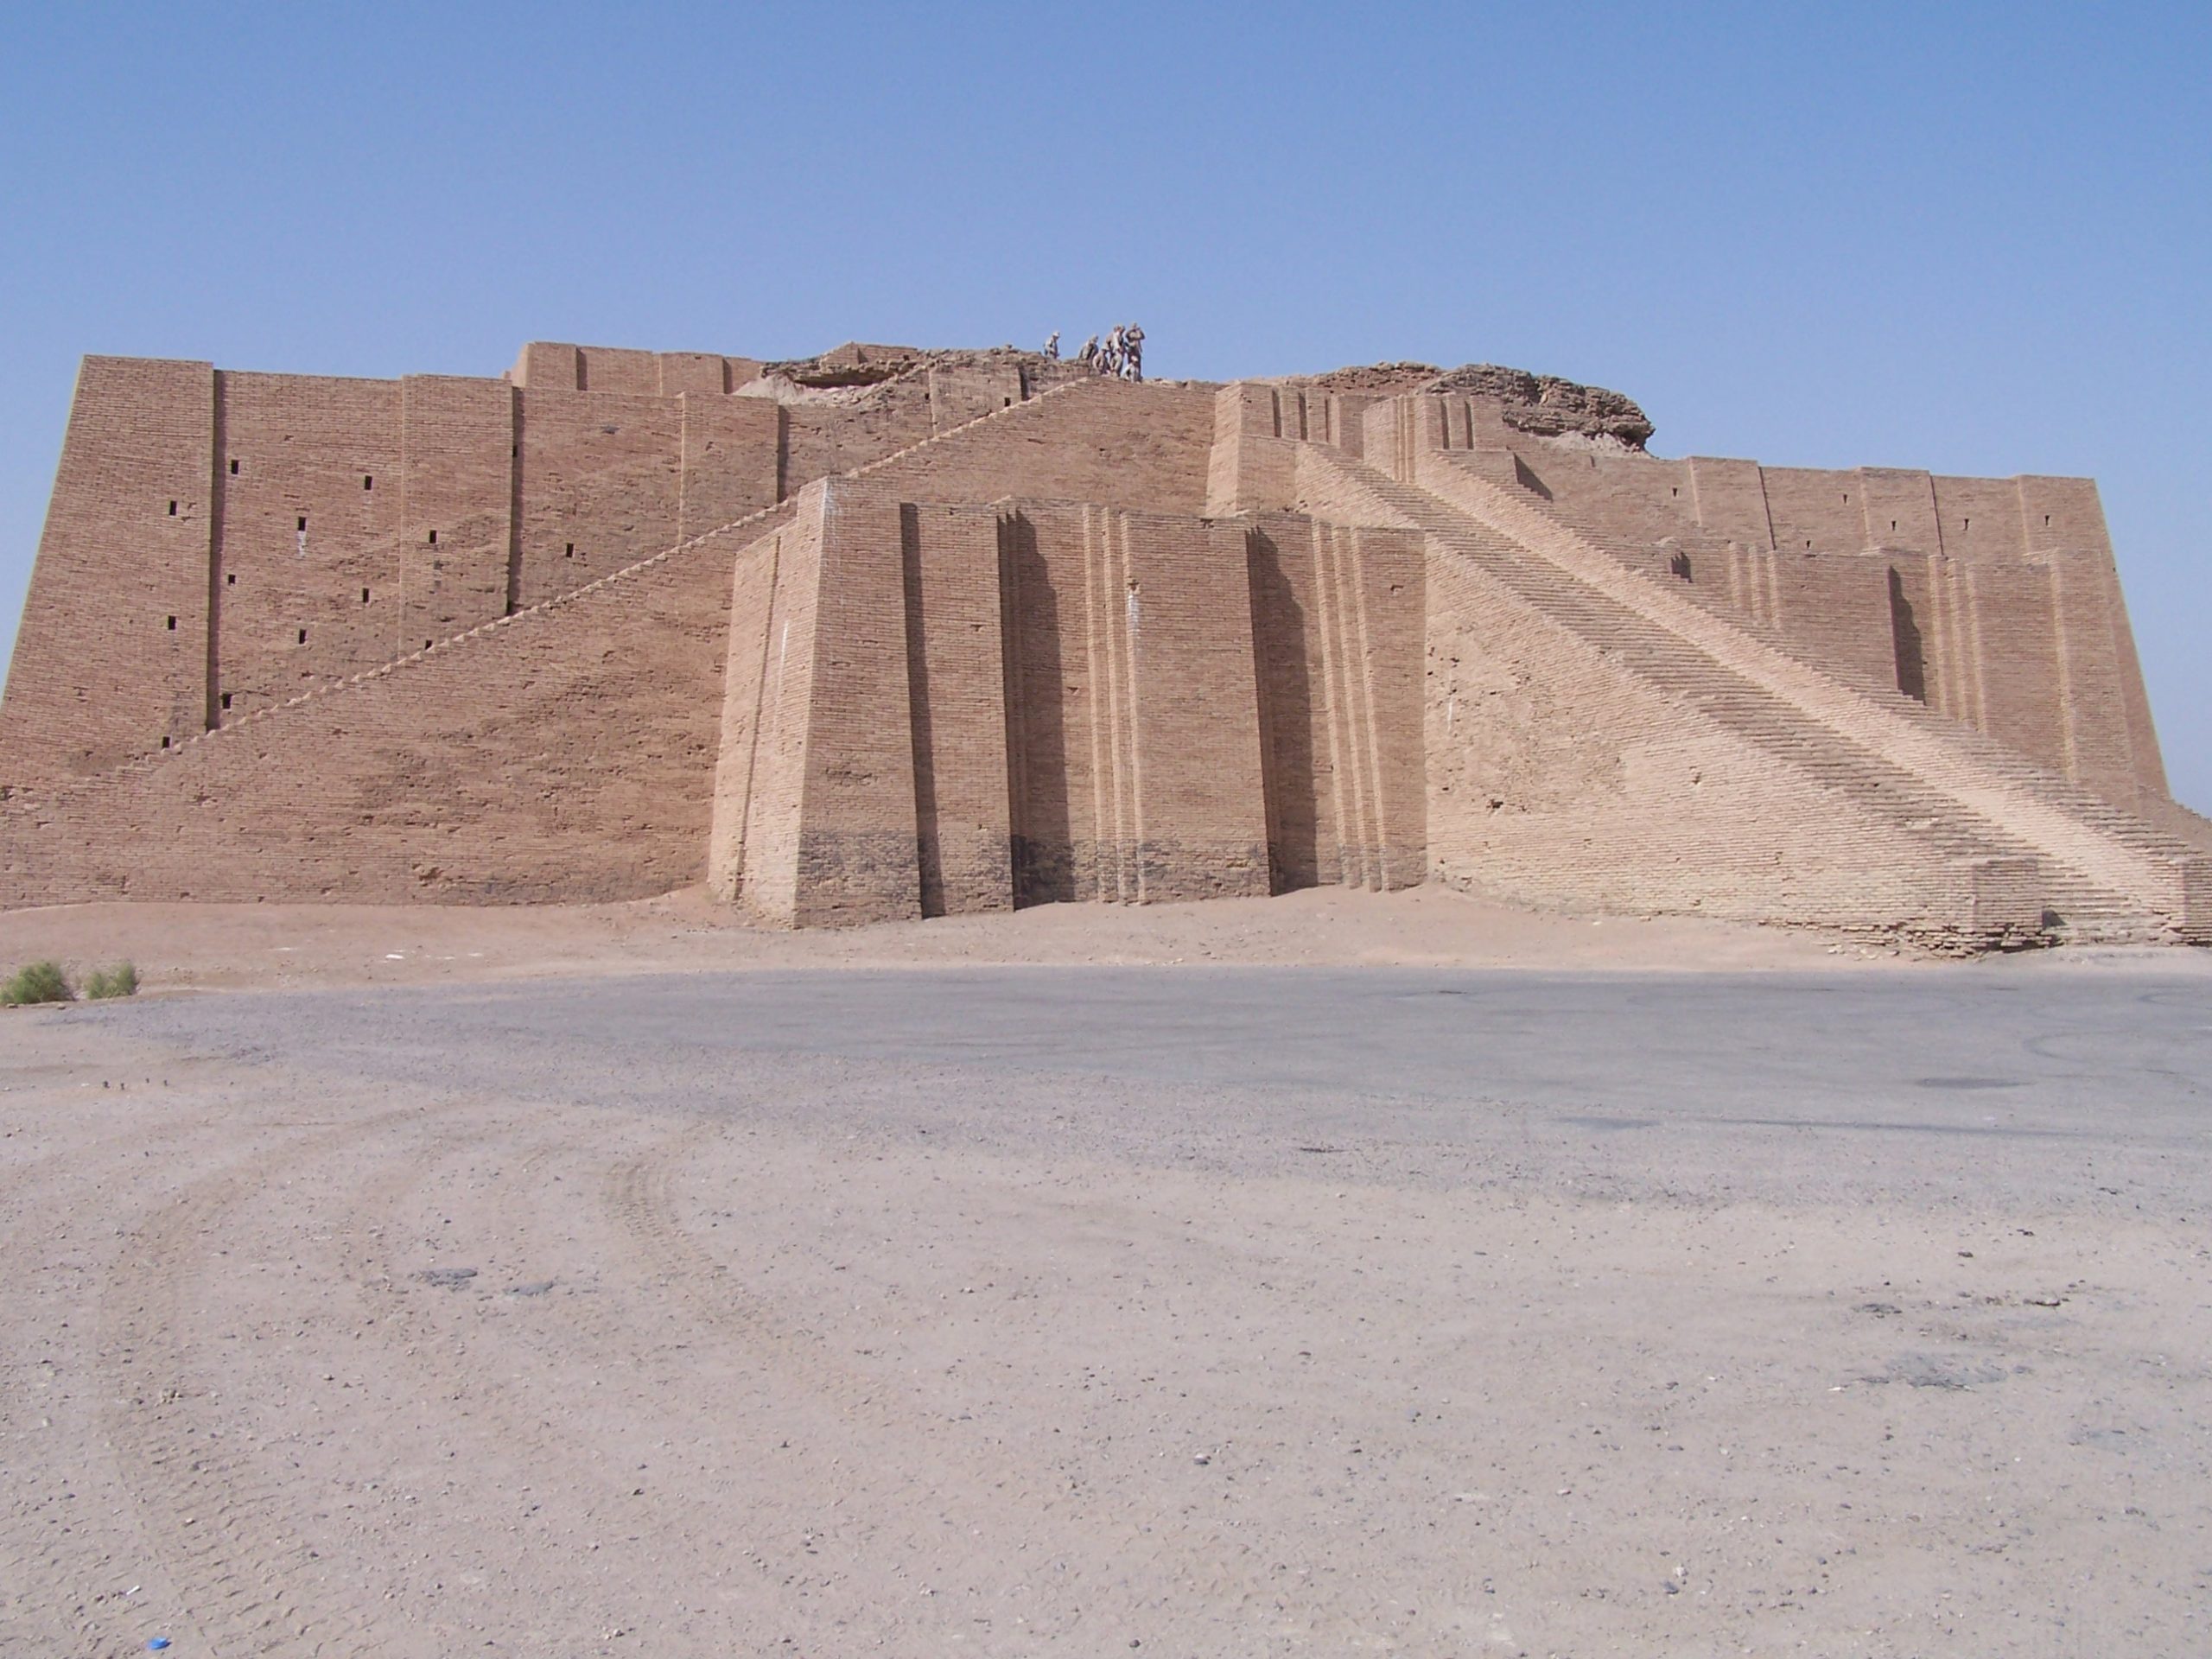 ziggurat section